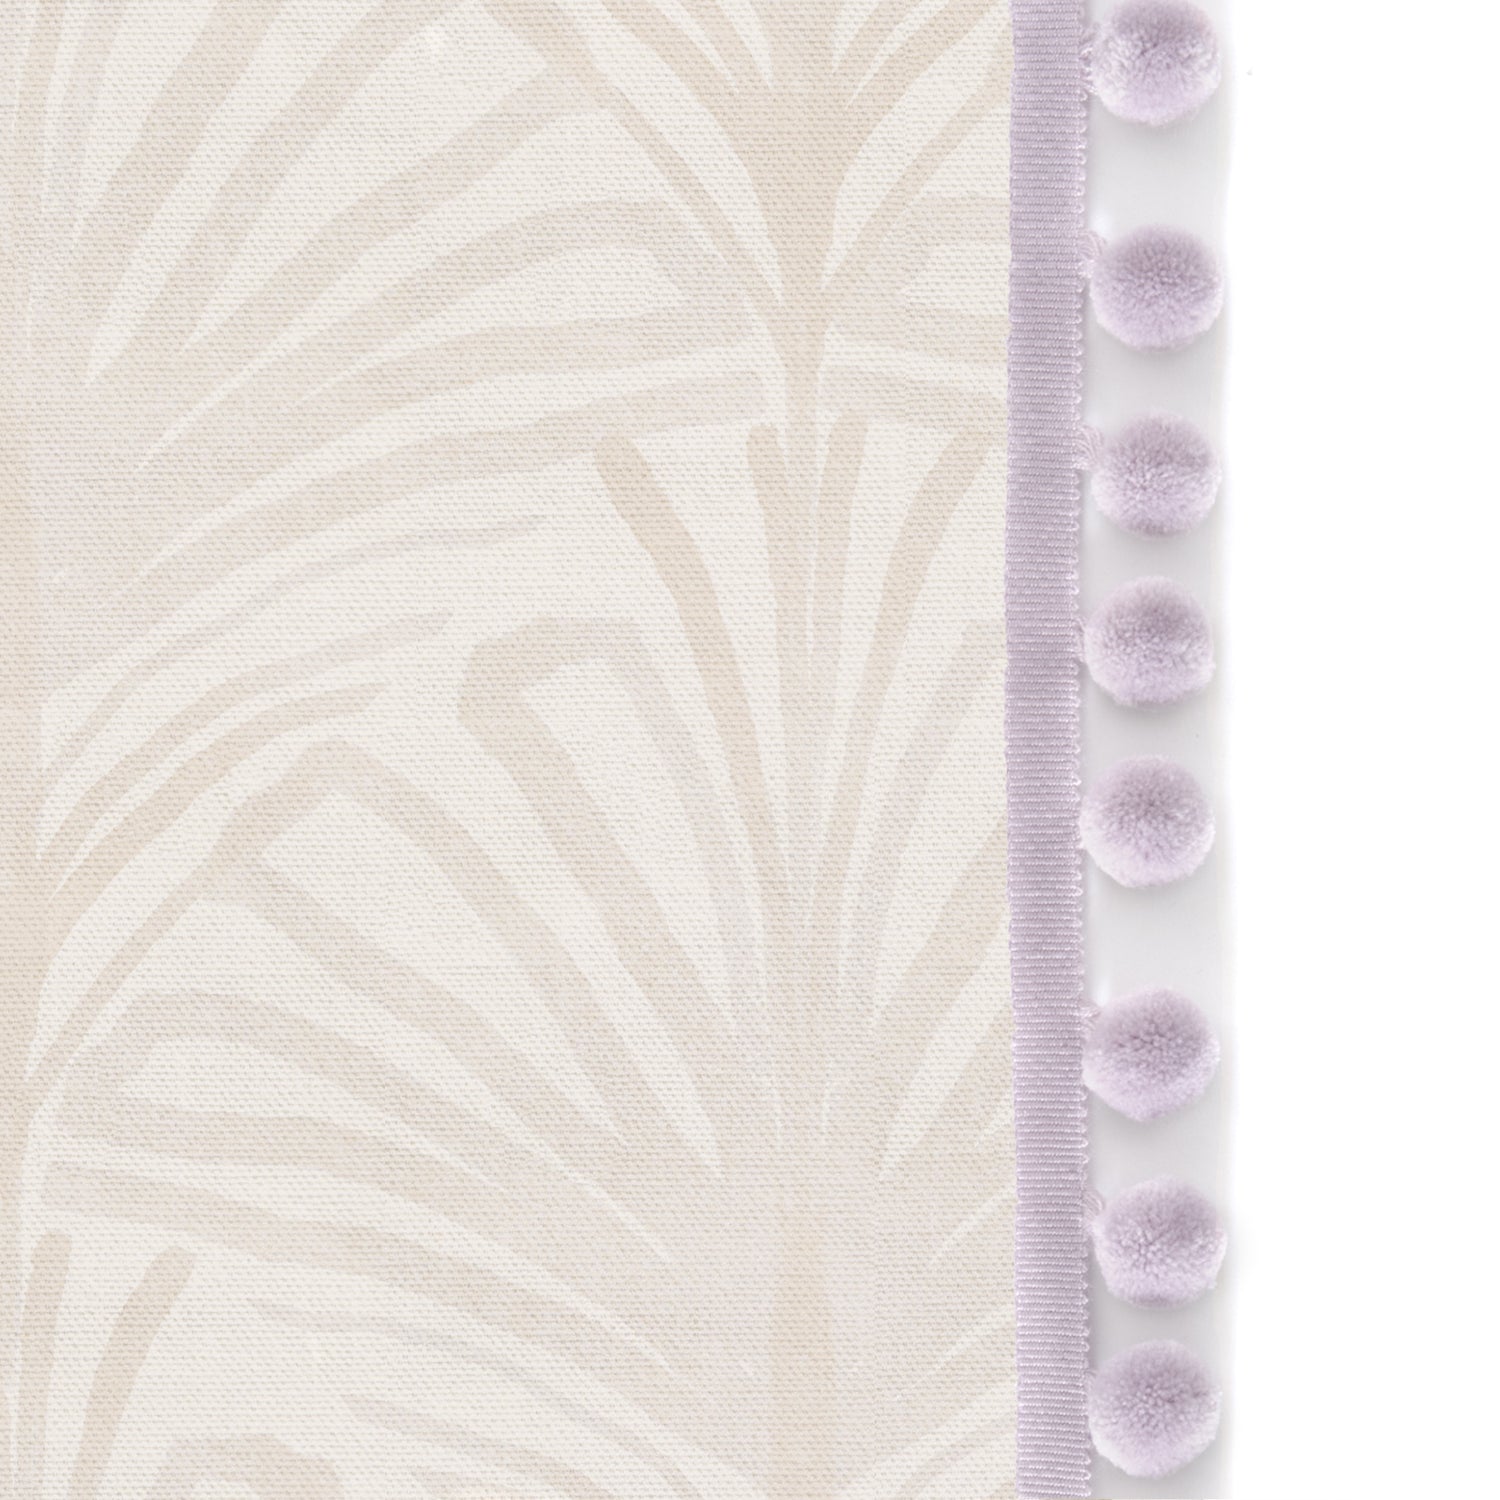 Upclose picture of Suzy Sand custom shower curtain with lilac pom pom trim